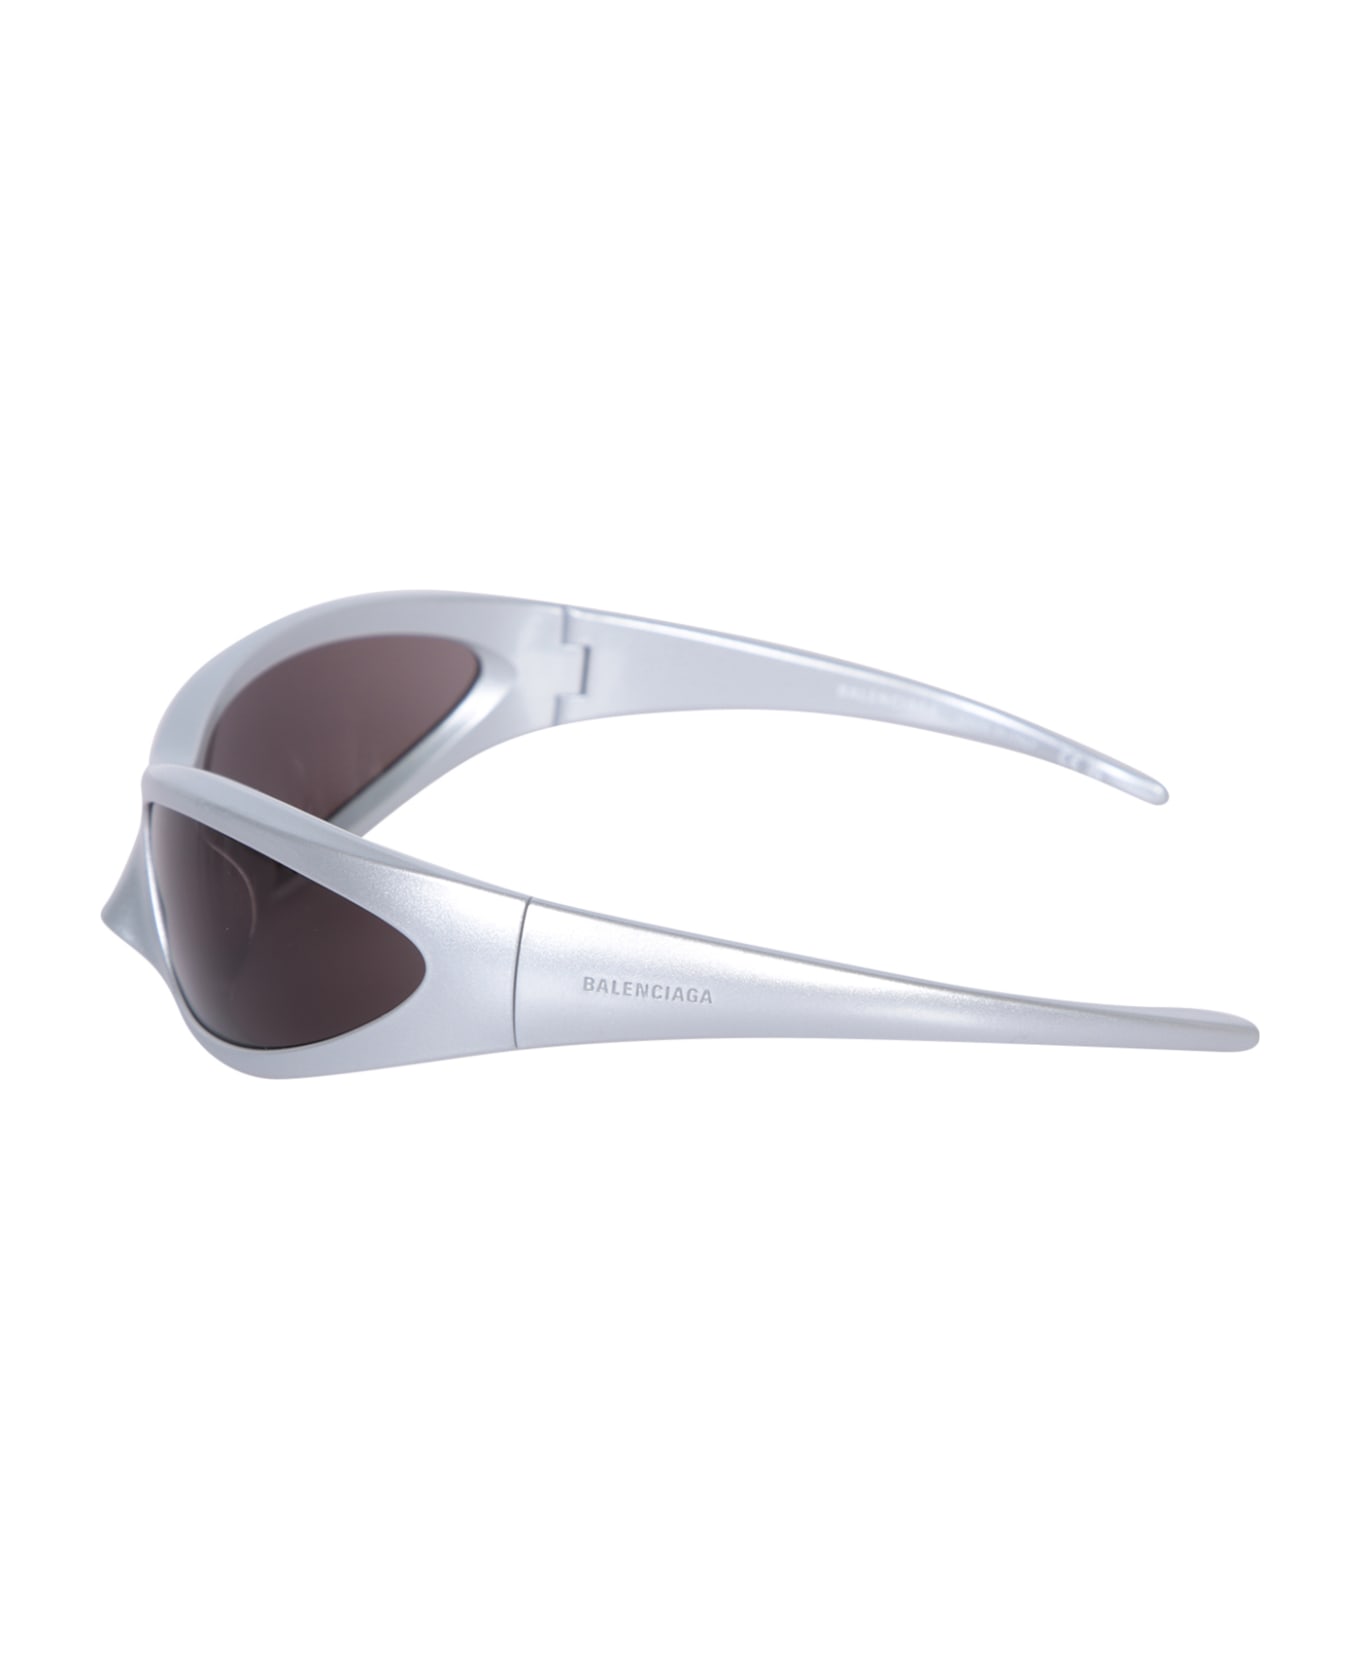 Balenciaga Skin Cat Silver Sunglasses - Metallic アクセサリー